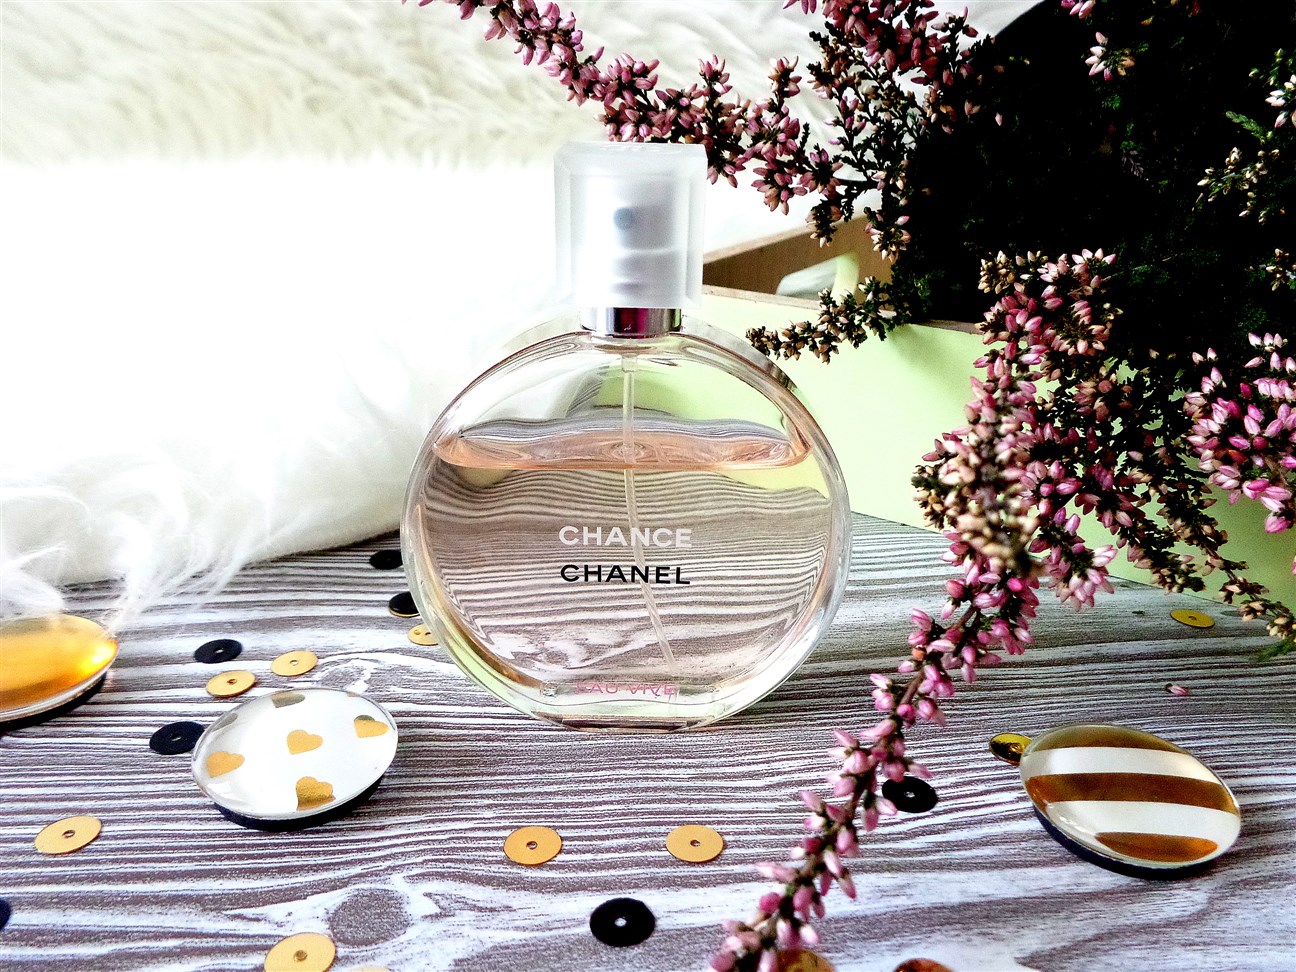 Chanel Chance Eau Vive! | secretaddiction.pl - kosmetyczny